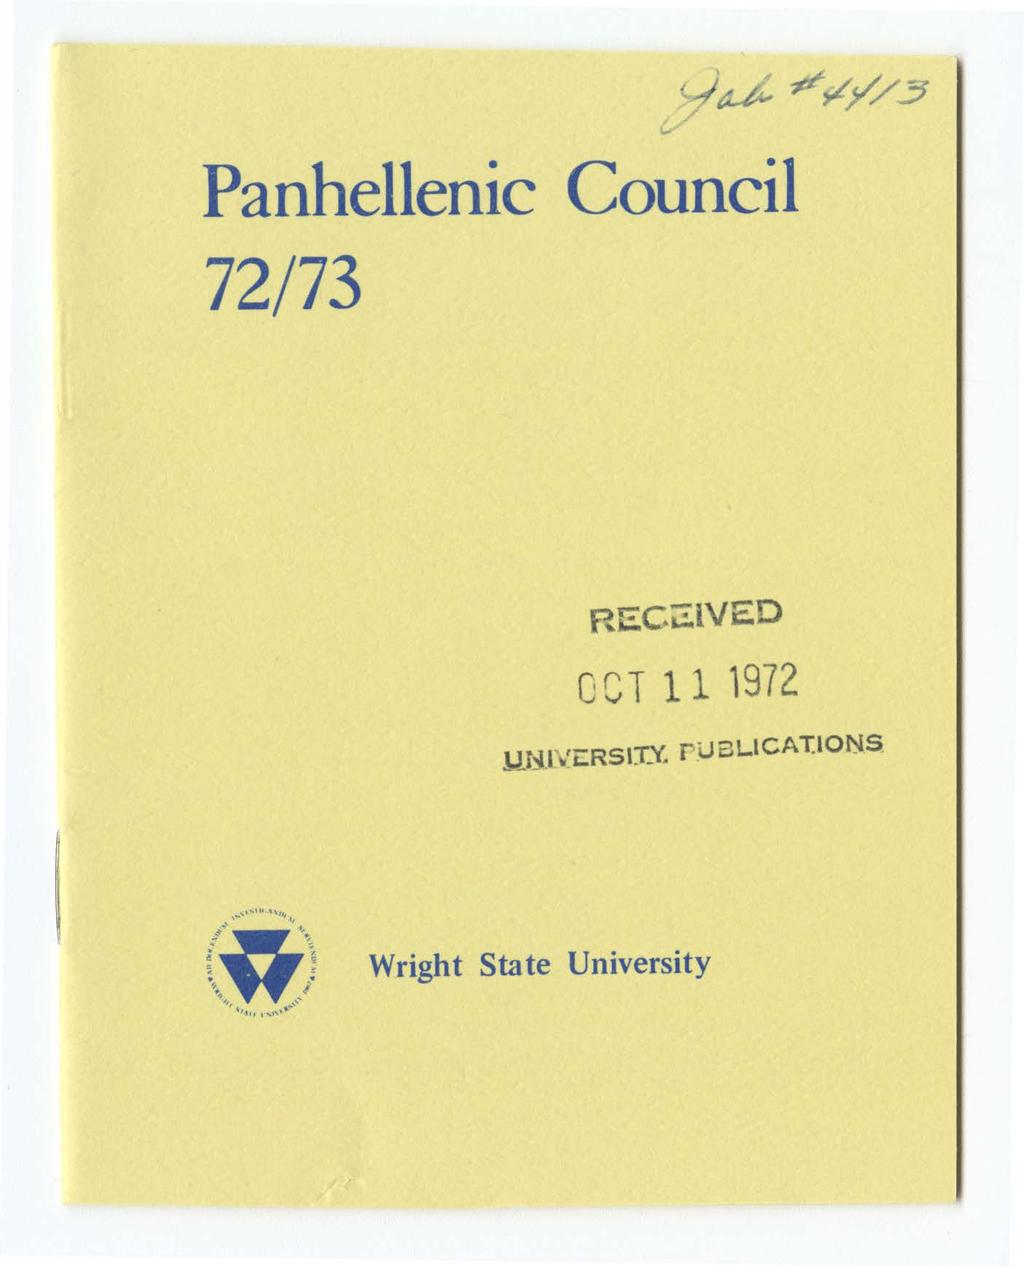 Panhellenic Council 72/73 RECi:::lVED GCT 11 1972.